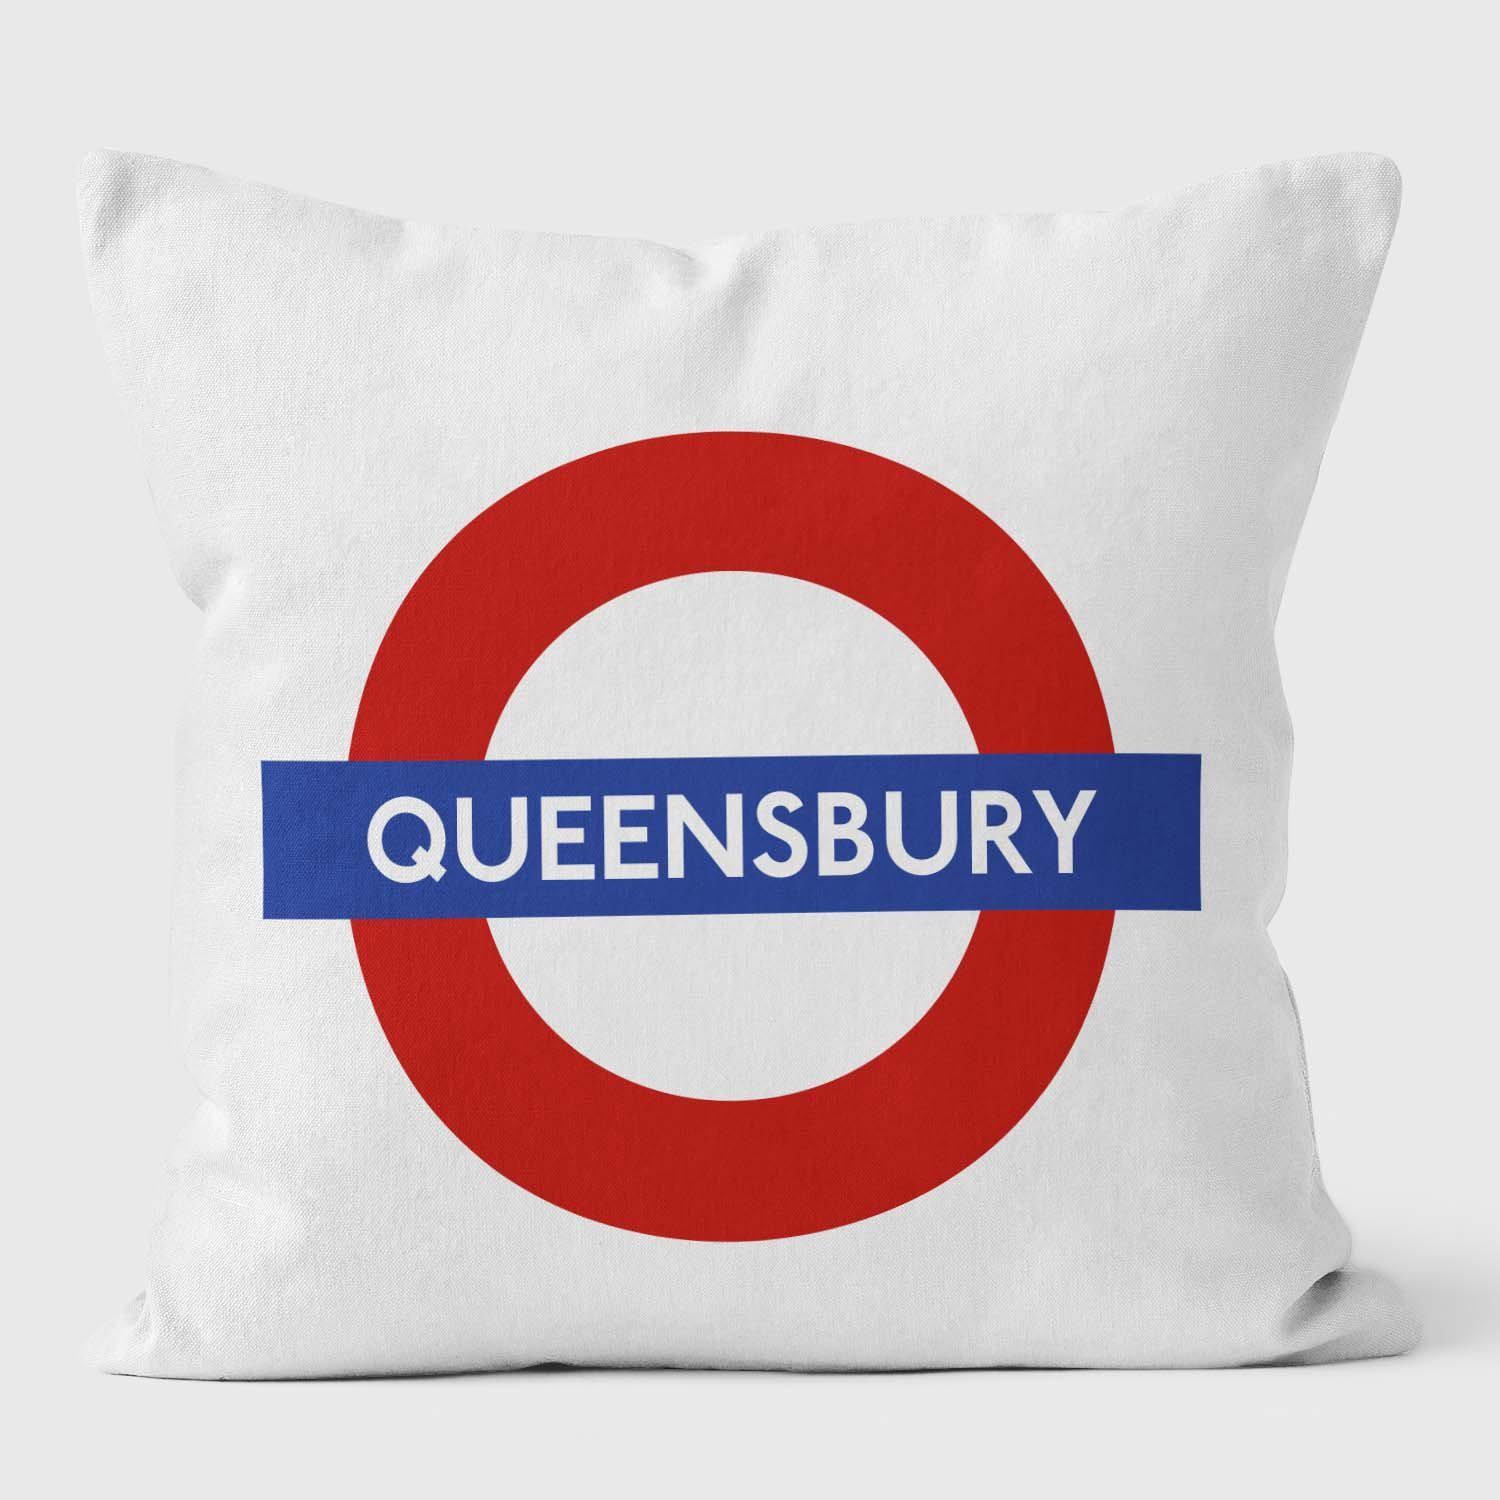 Queensbury London Underground Tube Station Roundel Cushion - Handmade Cushions UK - WeLoveCushions